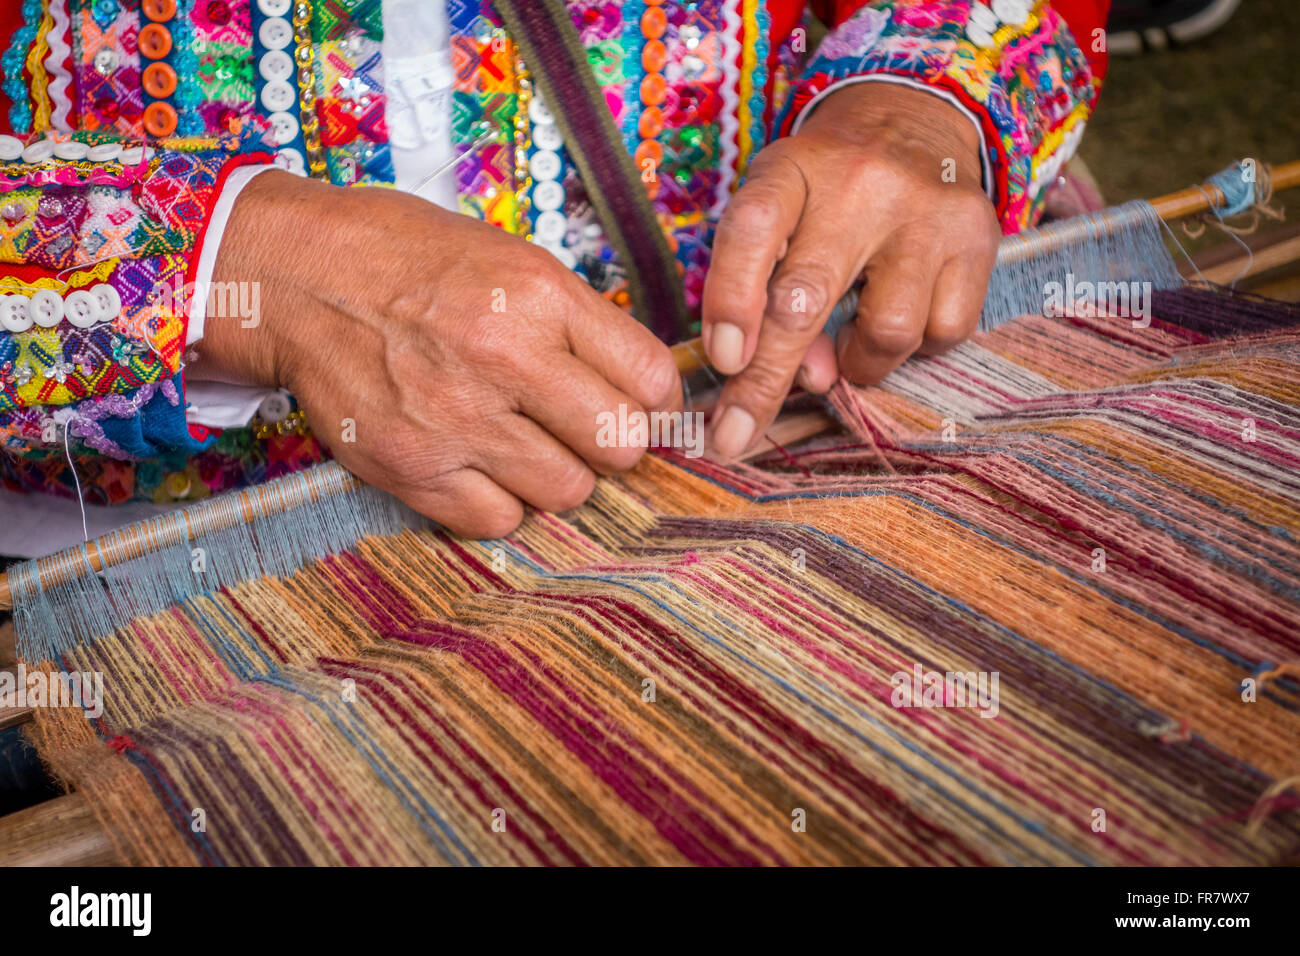 WASHINGTON, DC, USA - Woman from Cusco, Peru demonstrates weaving with backstrap loom (awana), during 2015 Smithsonian Folk Life Stock Photo